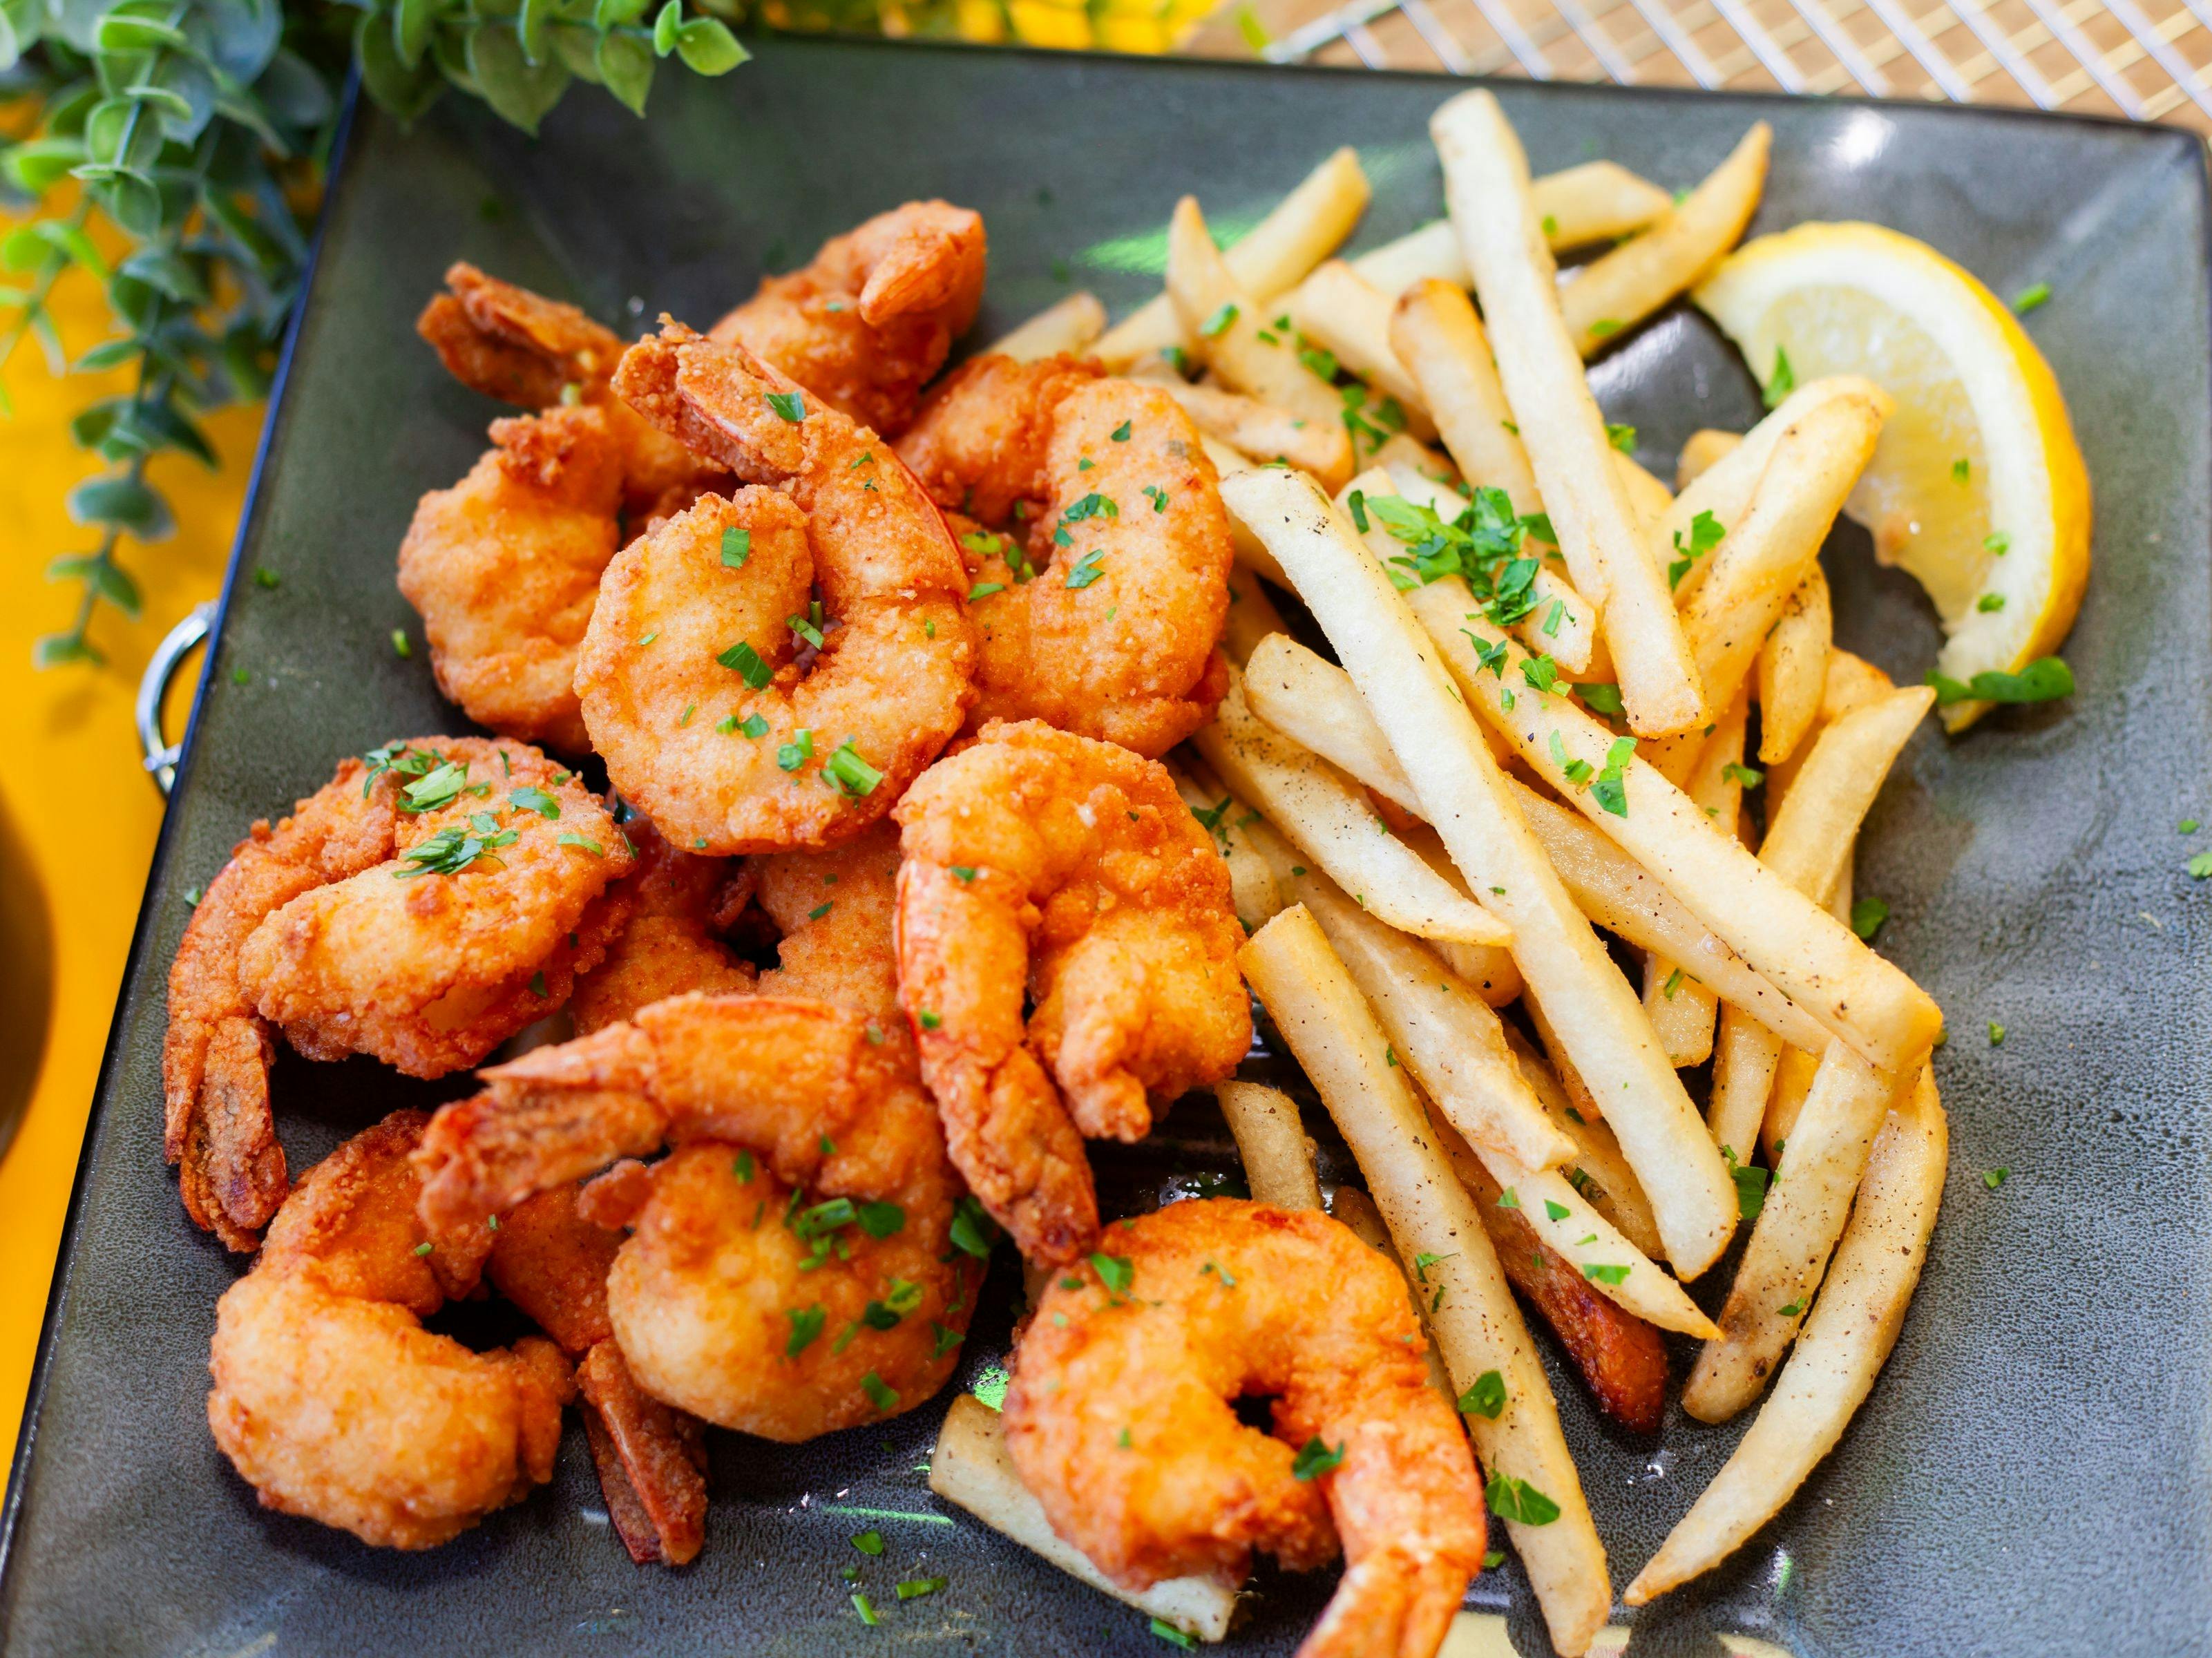 Photo of 'Large Shrimp' meal.